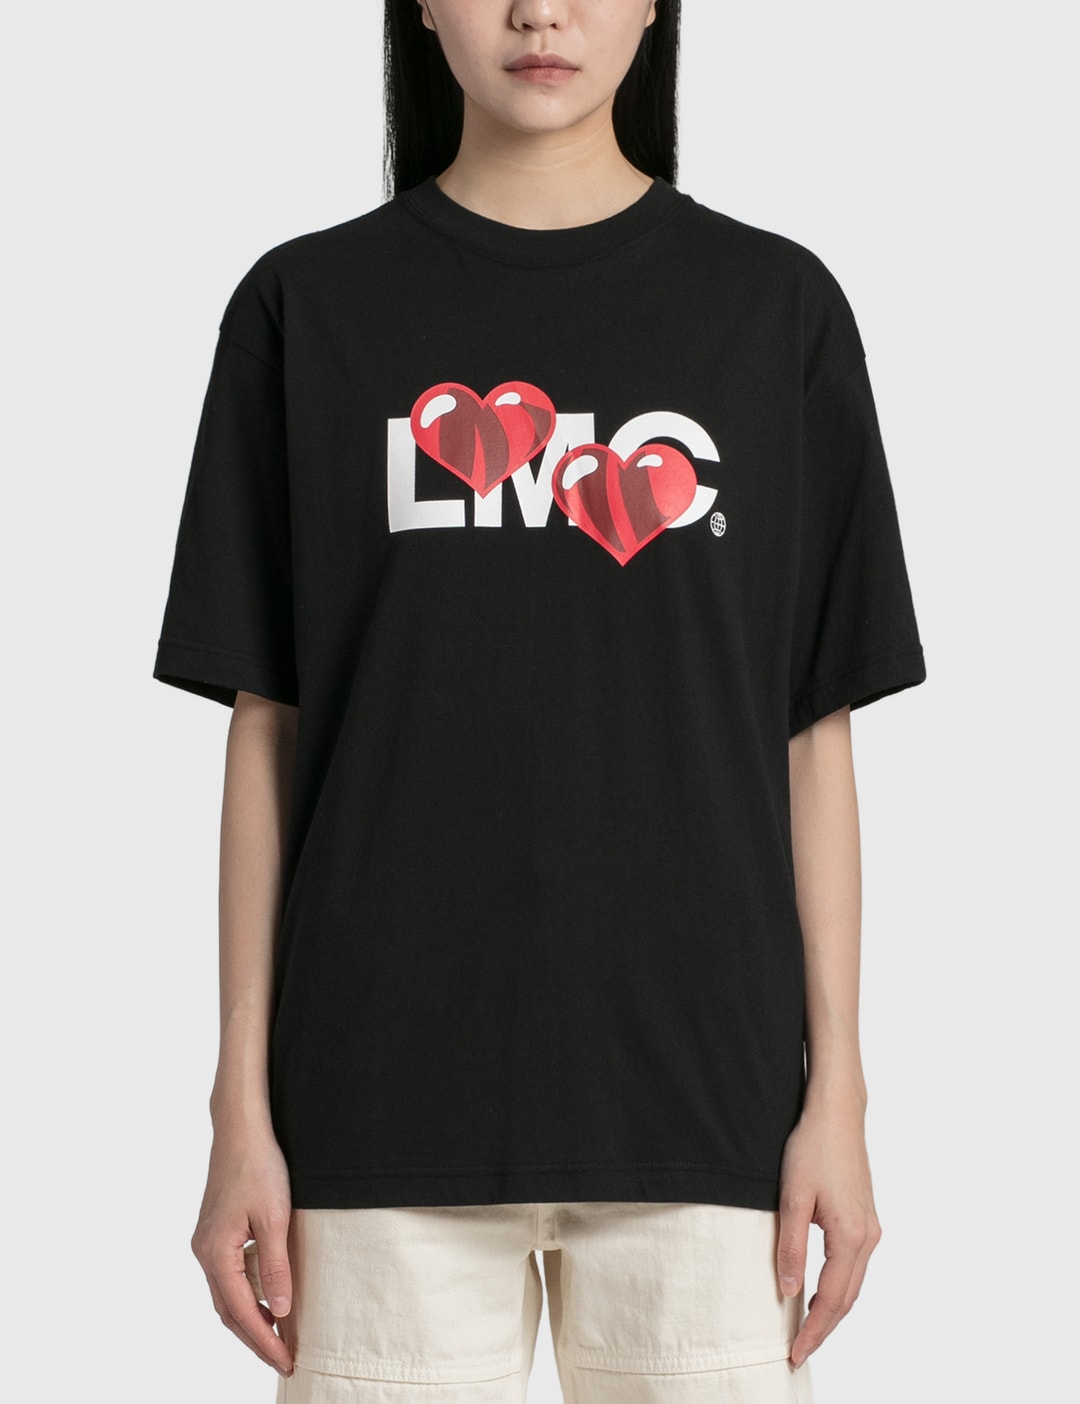 LMC - LMC Heart Logo T-shirt | HBX - Globally Curated Fashion and ...